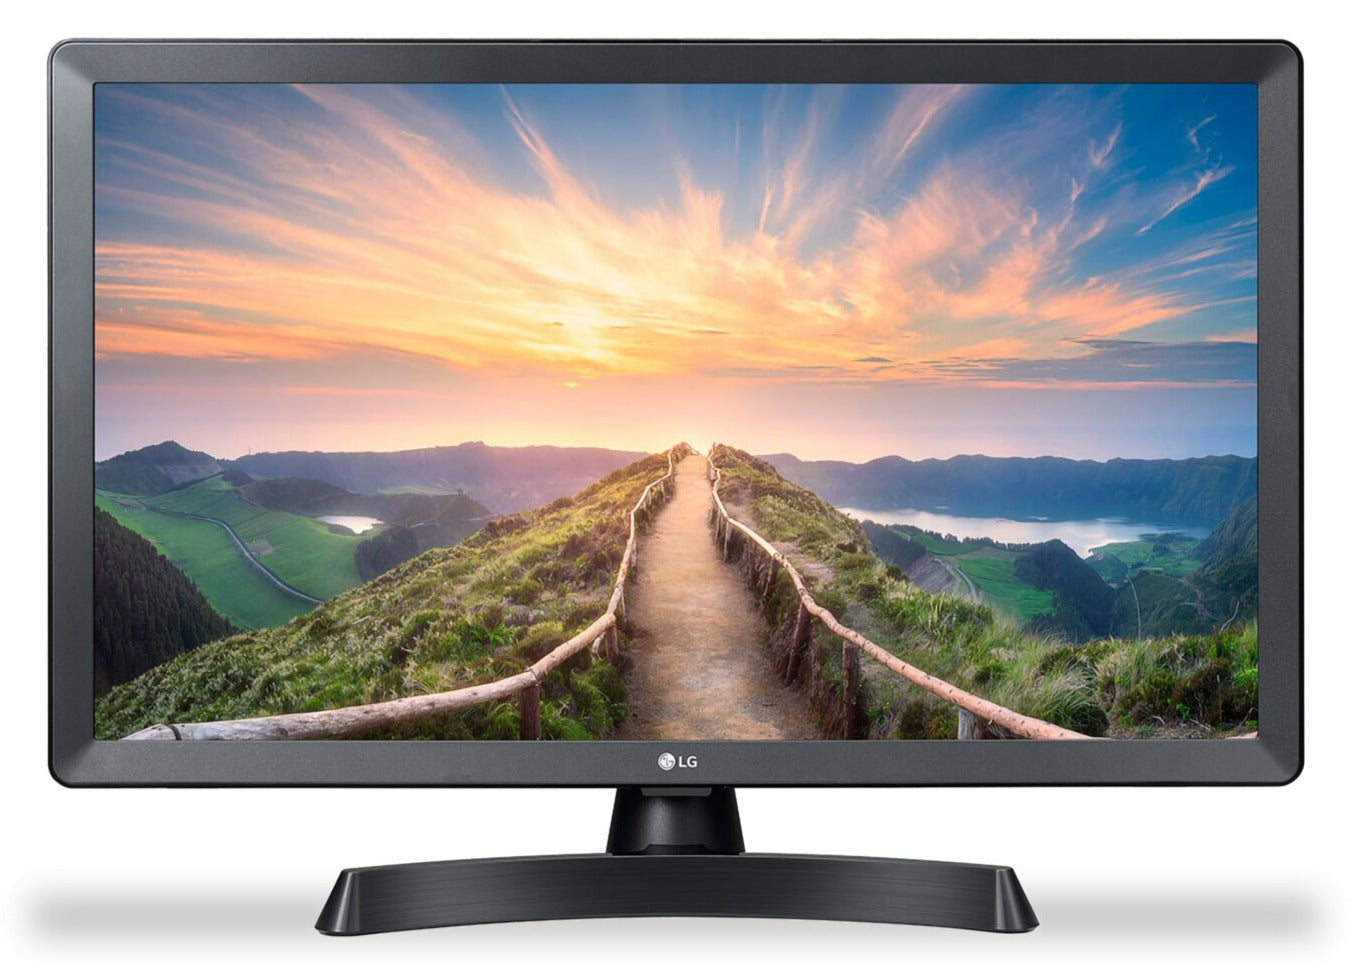 LG 24 720p HD Smart TV/Computer Monitor